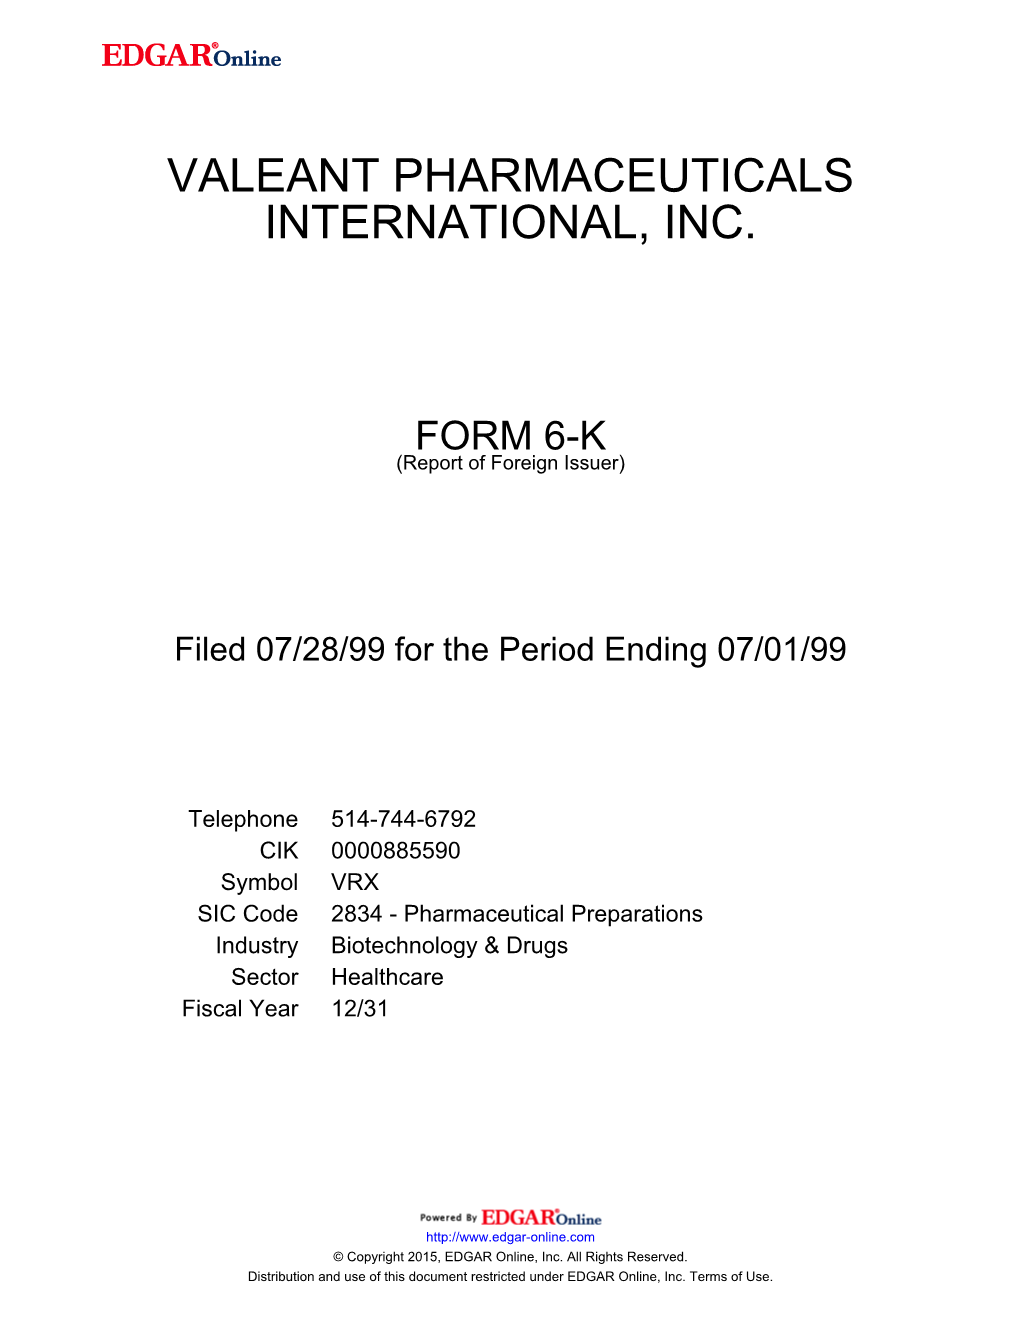 Valeant Pharmaceuticals International, Inc